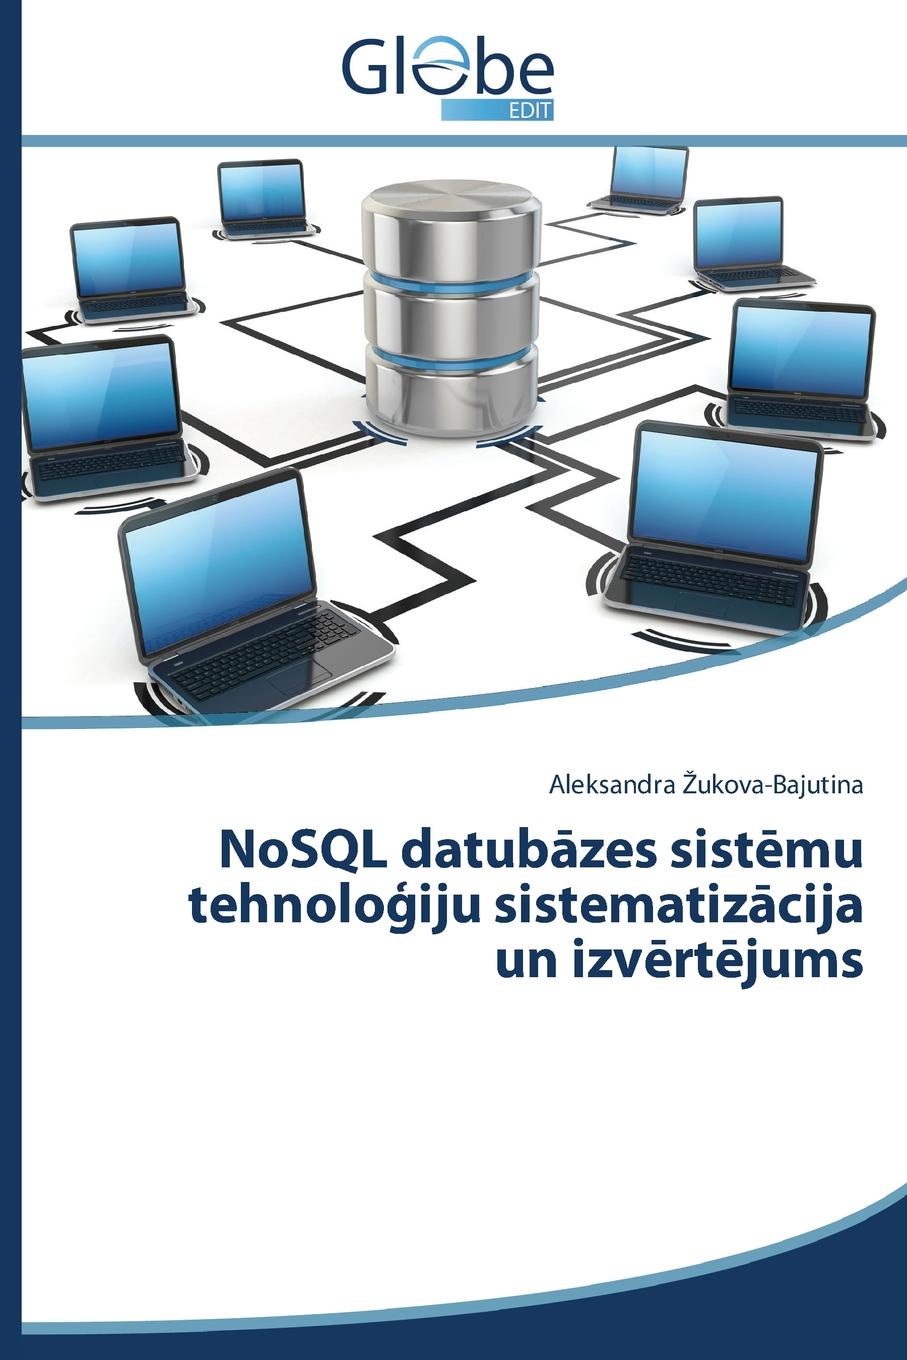 NoSQL datubazes sistemu tehnologiju sistematizacija un izvertejums